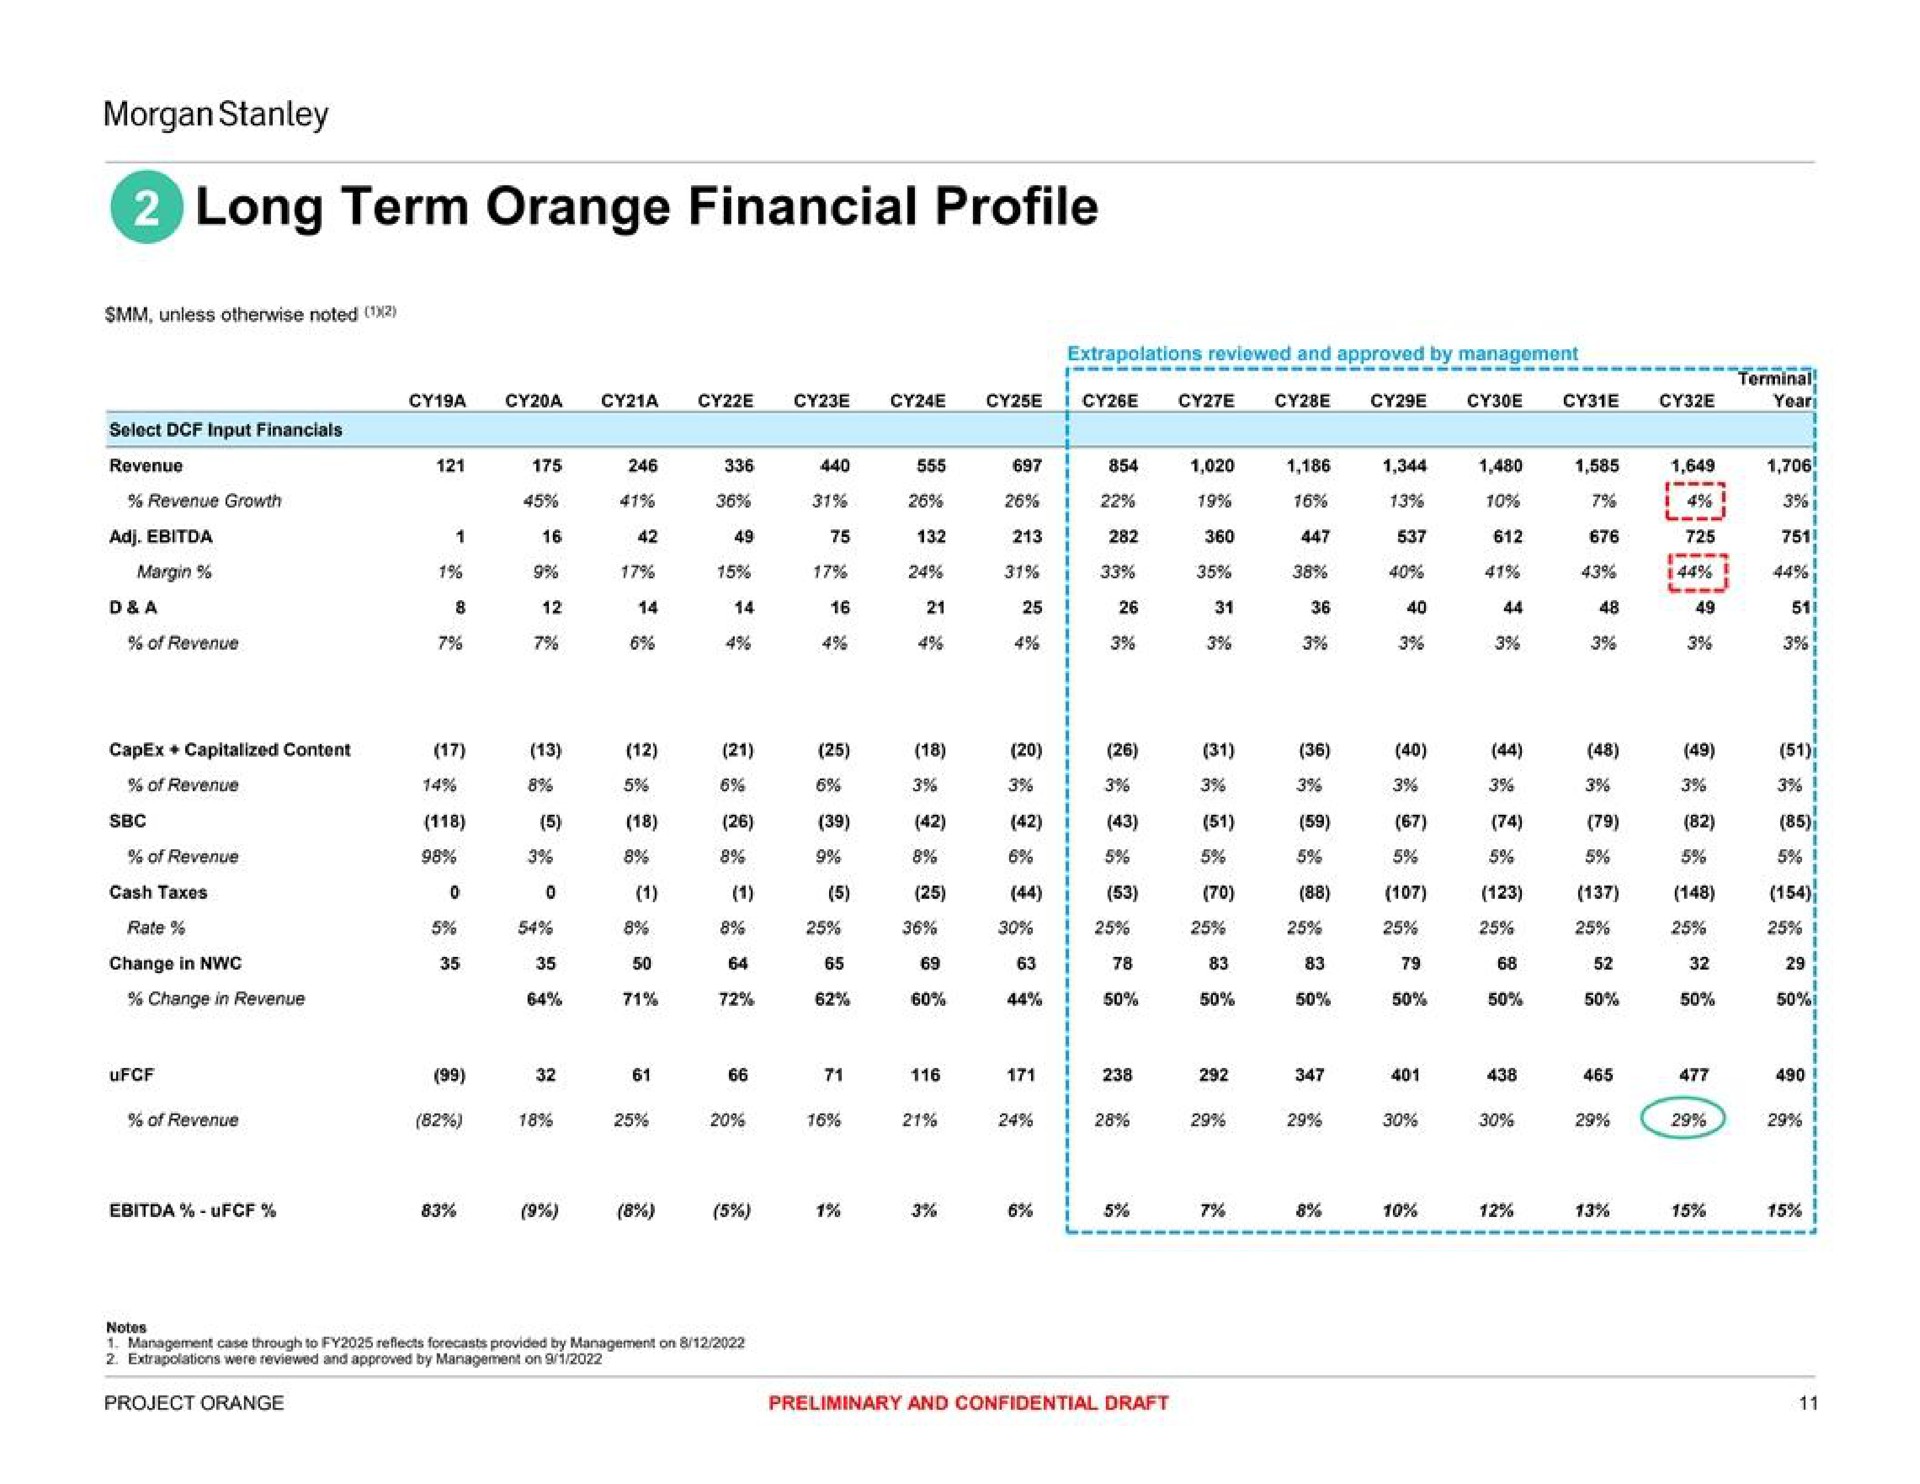 long term orange financial profile | Morgan Stanley